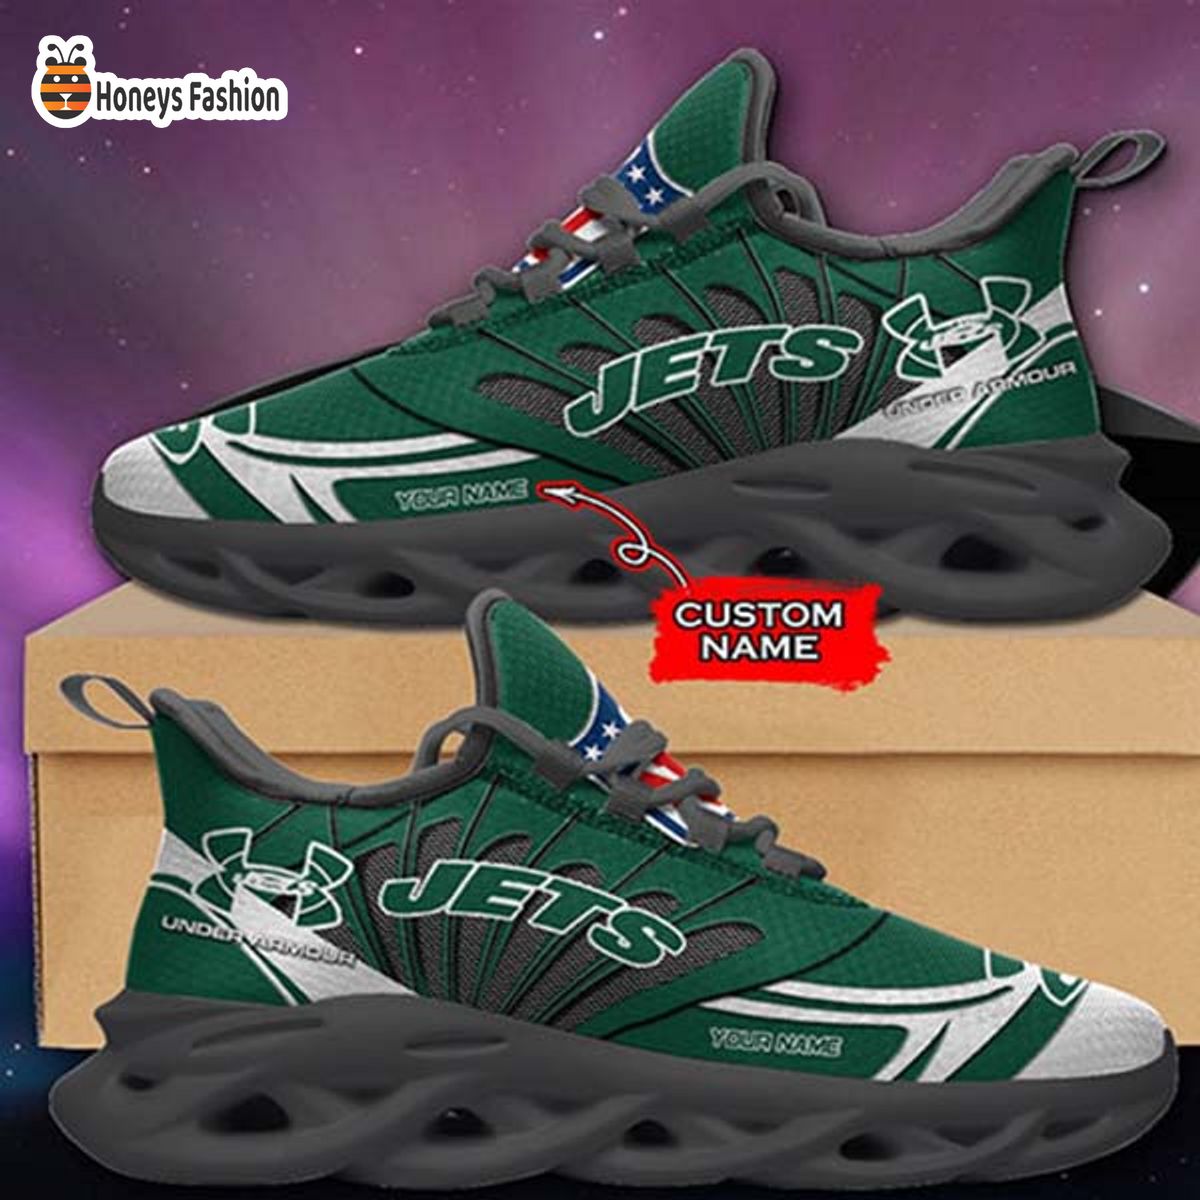 New York Jets Under Armour Custom Name Max Soul Sneaker